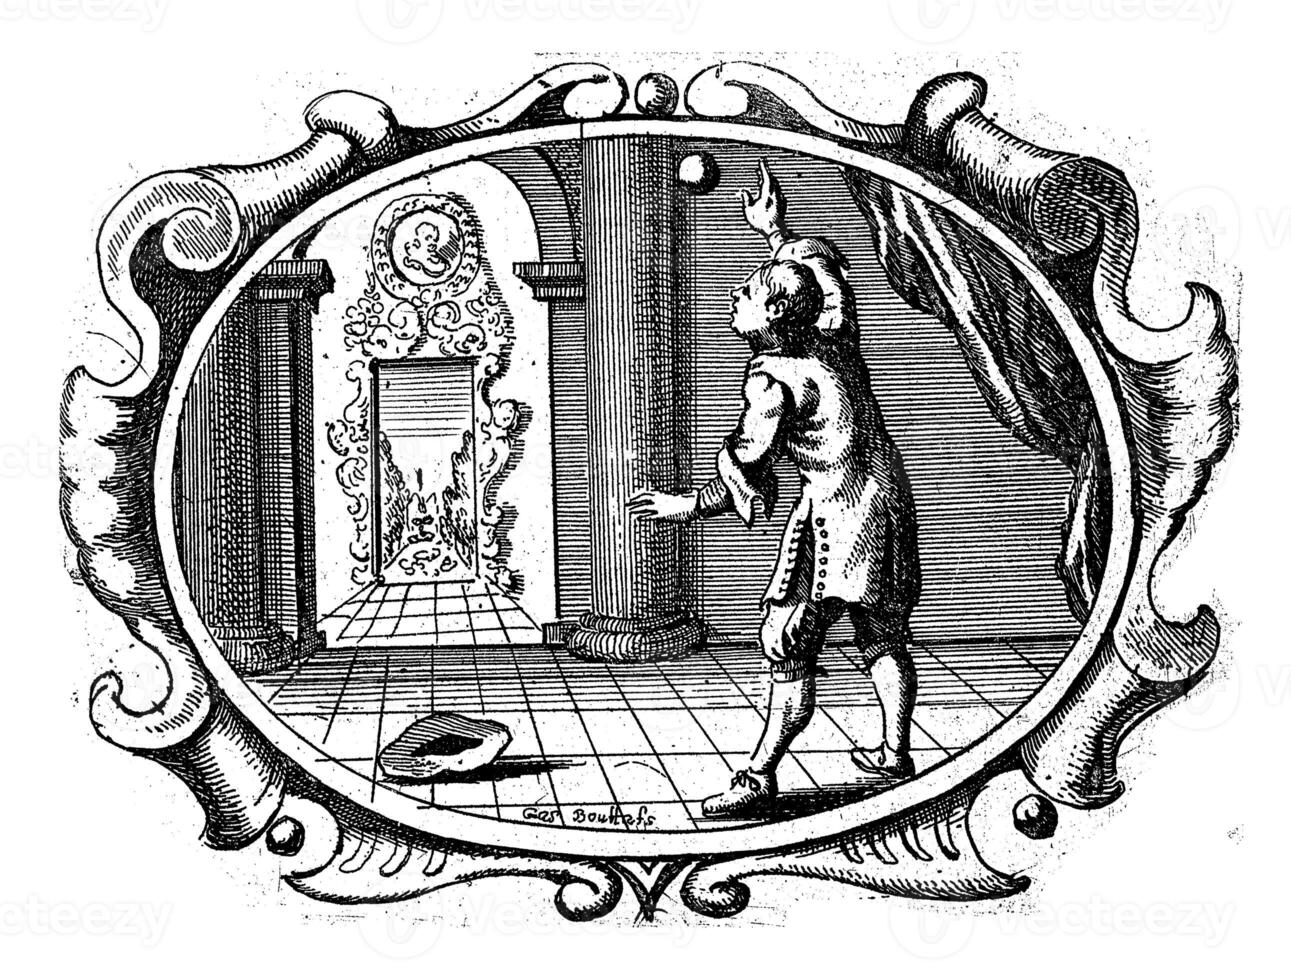 adversidade exalta homem, Gaspar brigas, 1679 foto